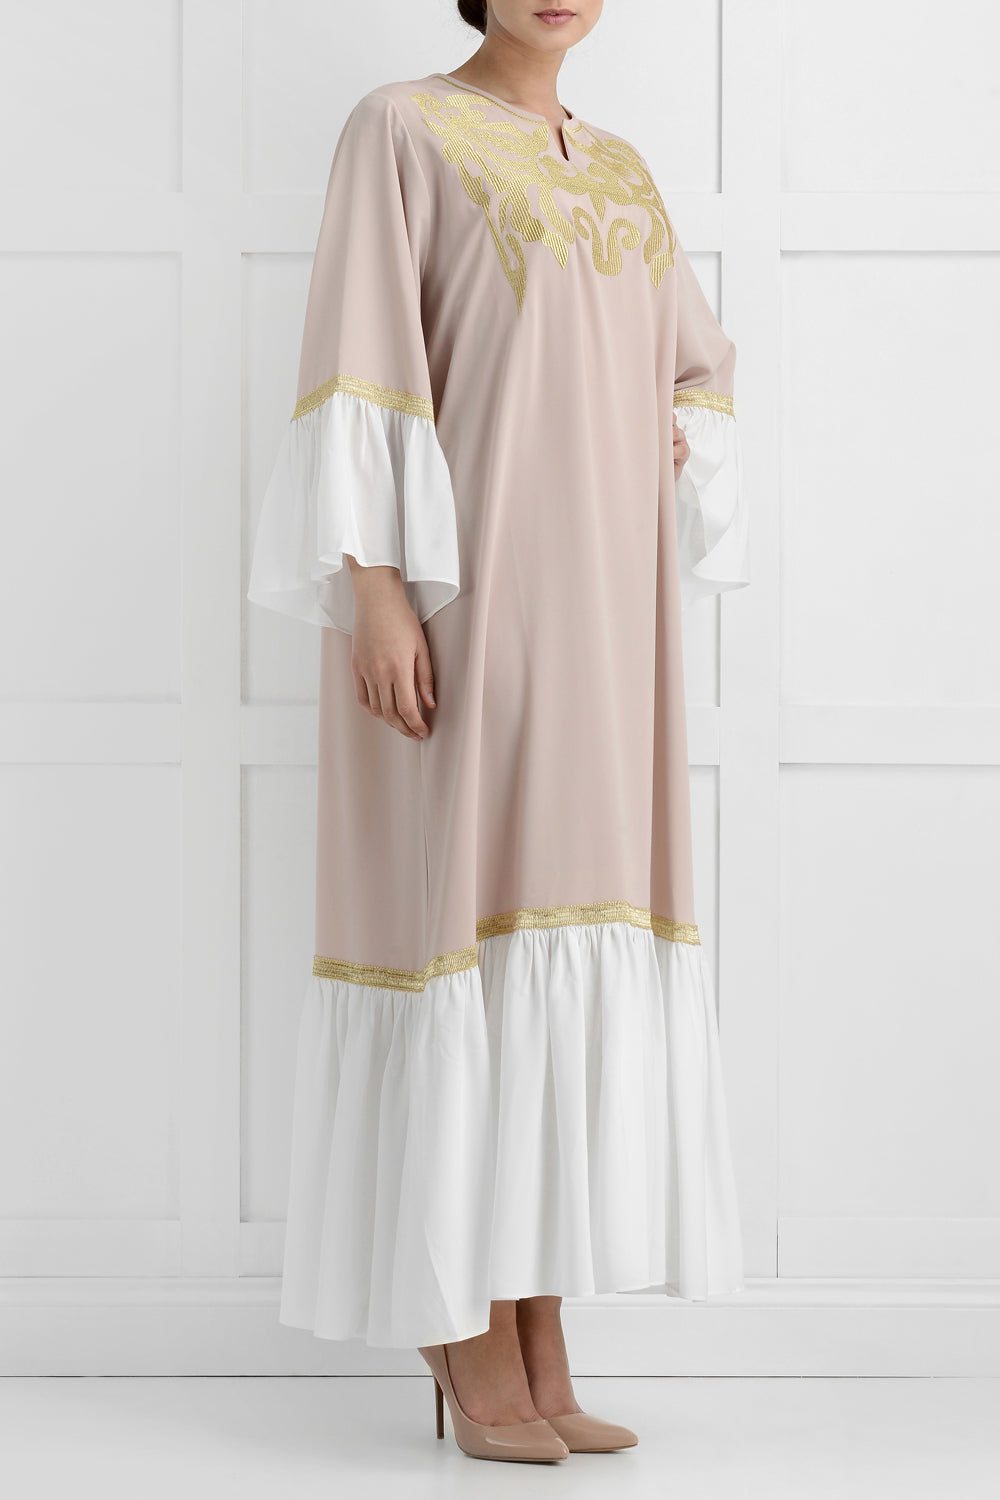 Fareeda Luxury Dress Abaya